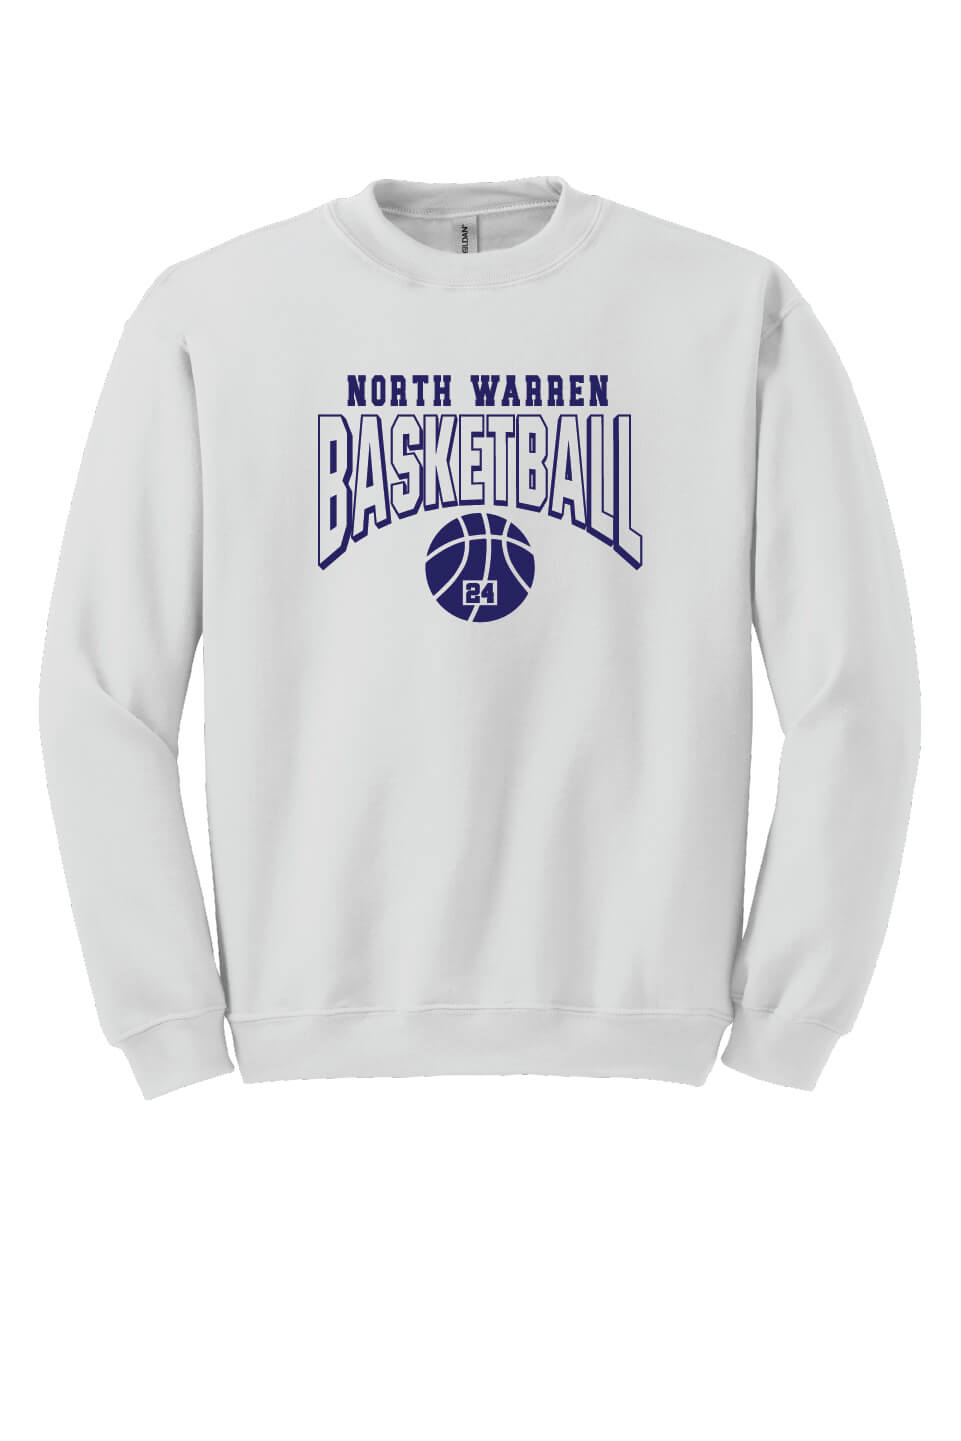 Basketball Crewneck Sweatshirt (Youth) white